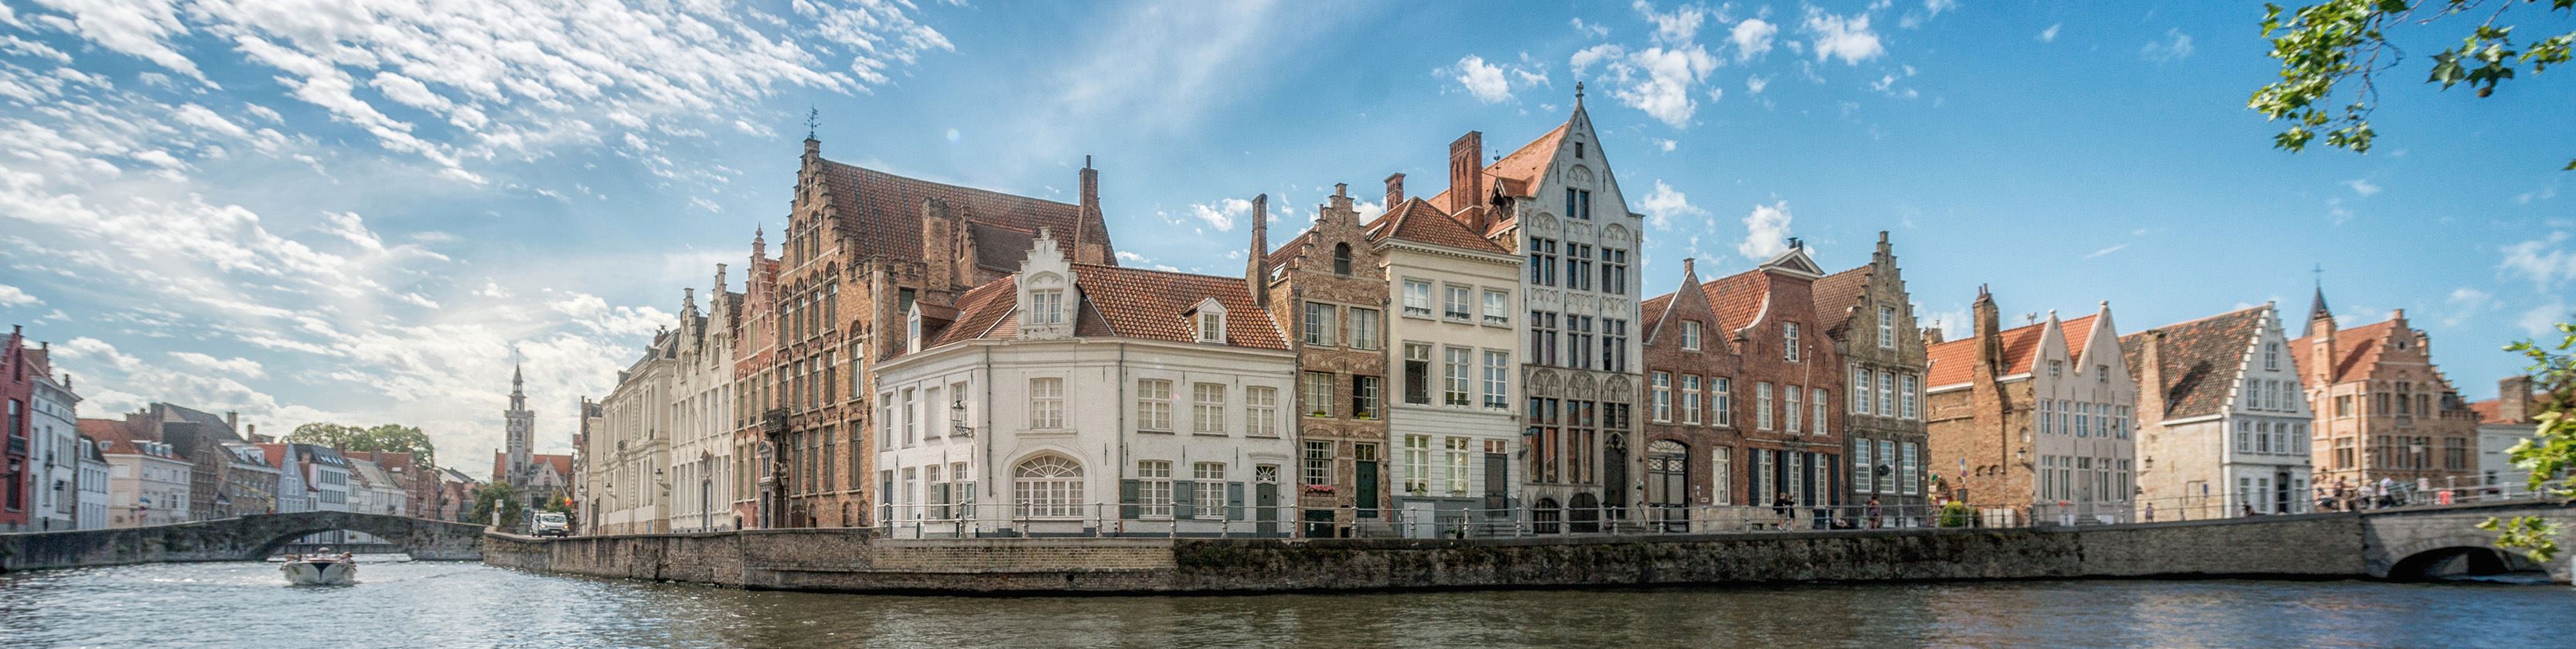 Hotel Navarra Bruges Off Season Package Deal